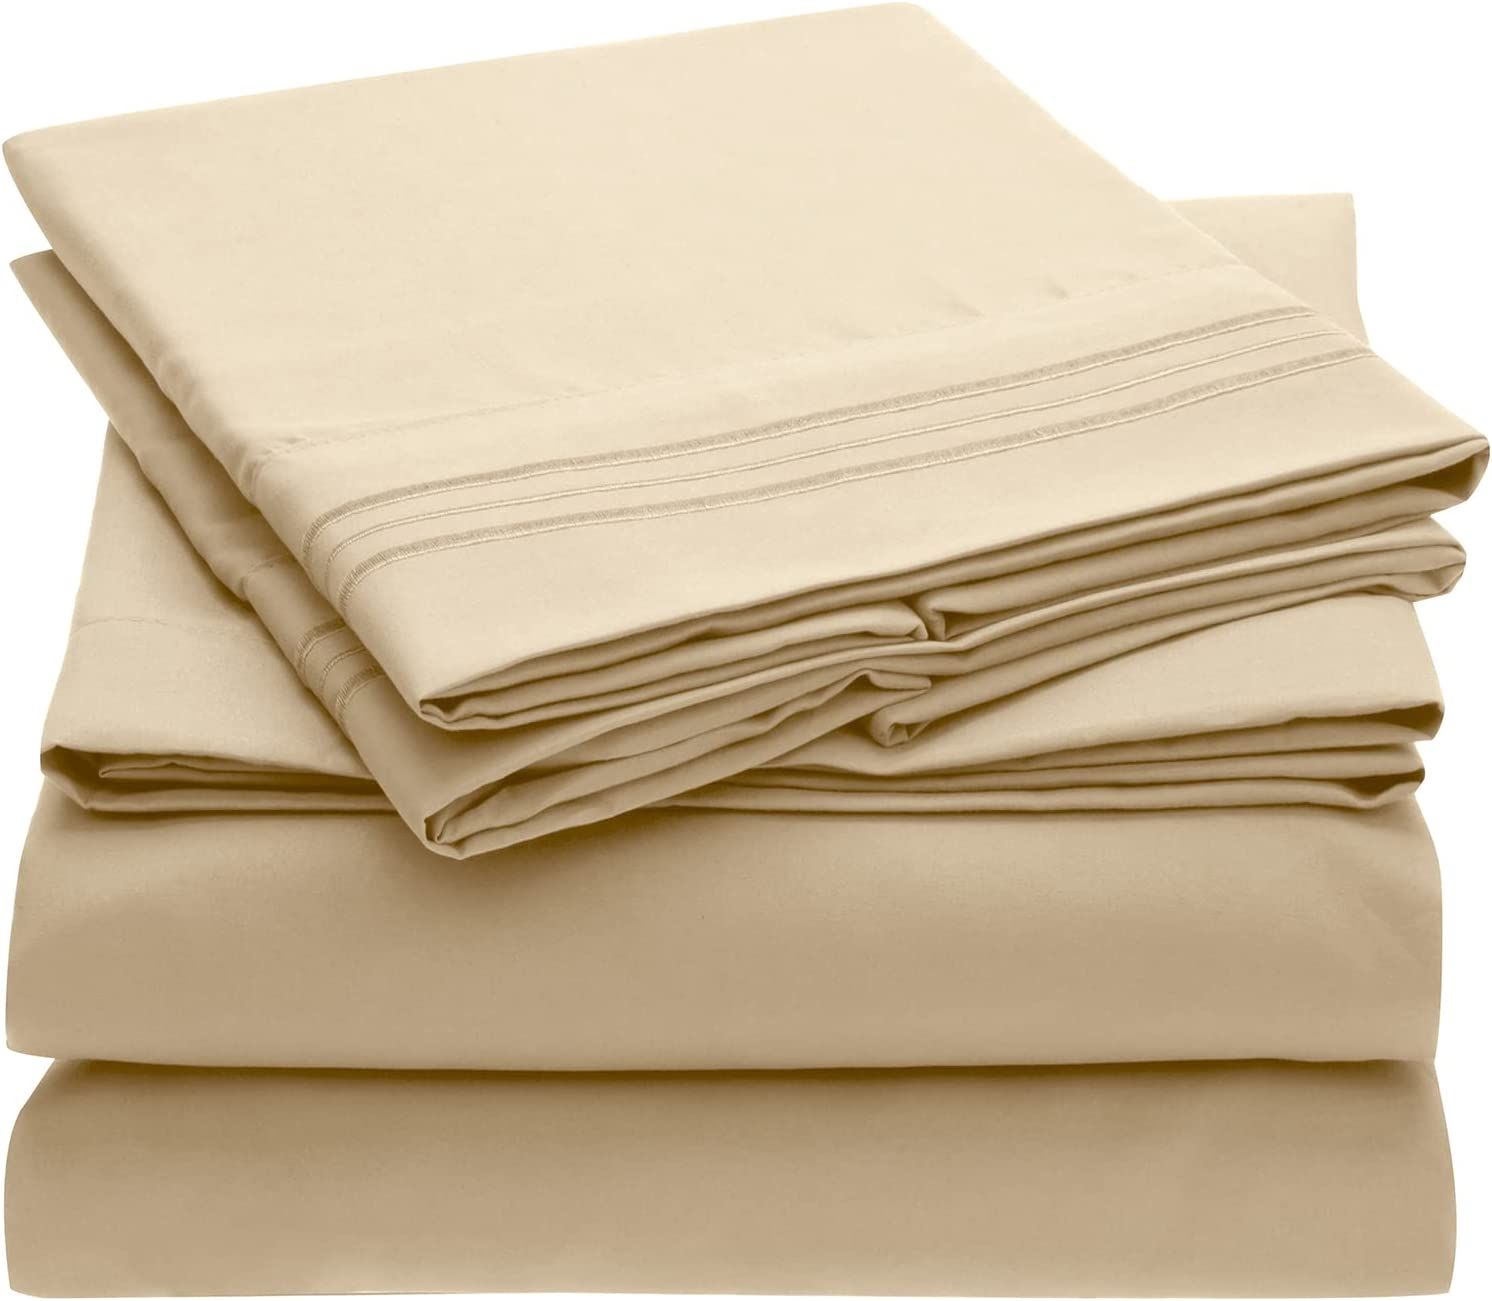 Mellanni Extra Deep Pocket Twin XL Sheet Set - Luxury 1800 Bedding Sheets & Pillowcases - Fits Co... | Amazon (US)